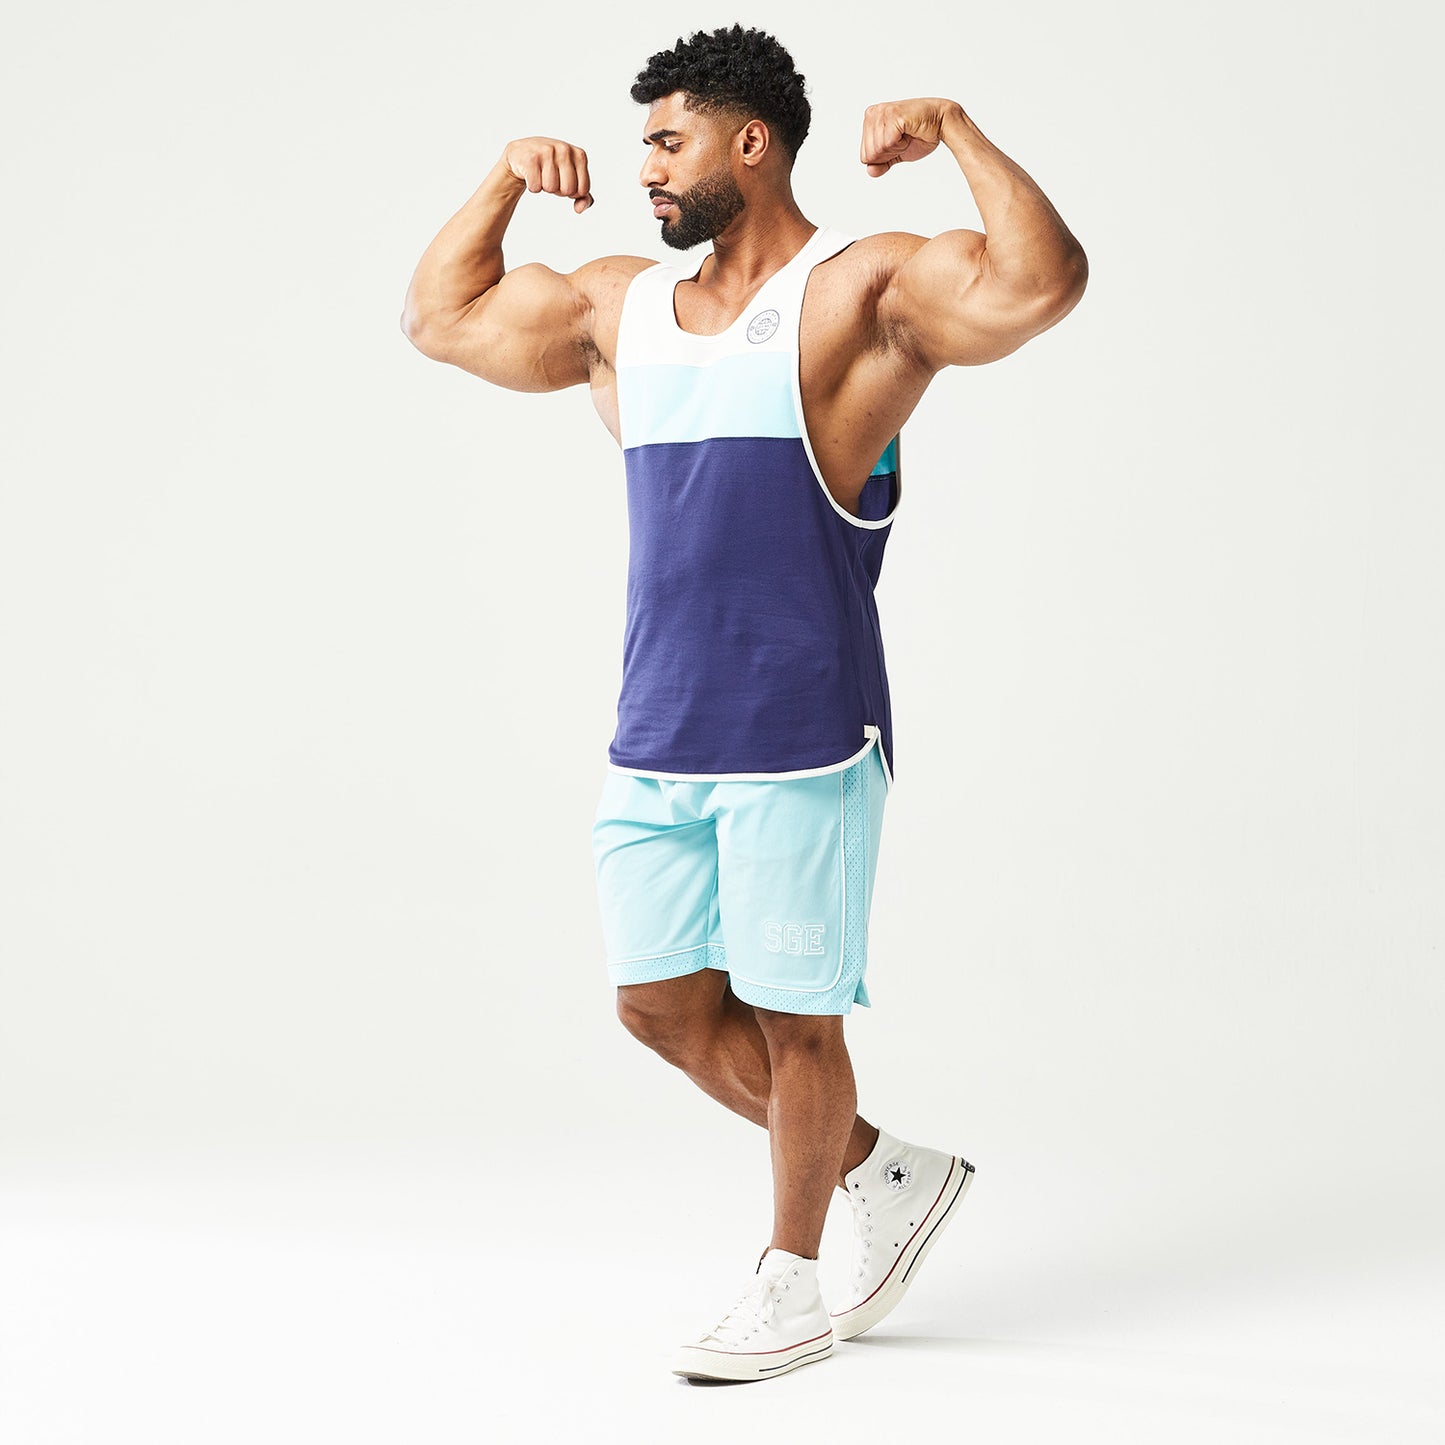 squatwolf-gym-wear-golden-era-versatility-tank-multi-color-workout-tank-tops-for-men